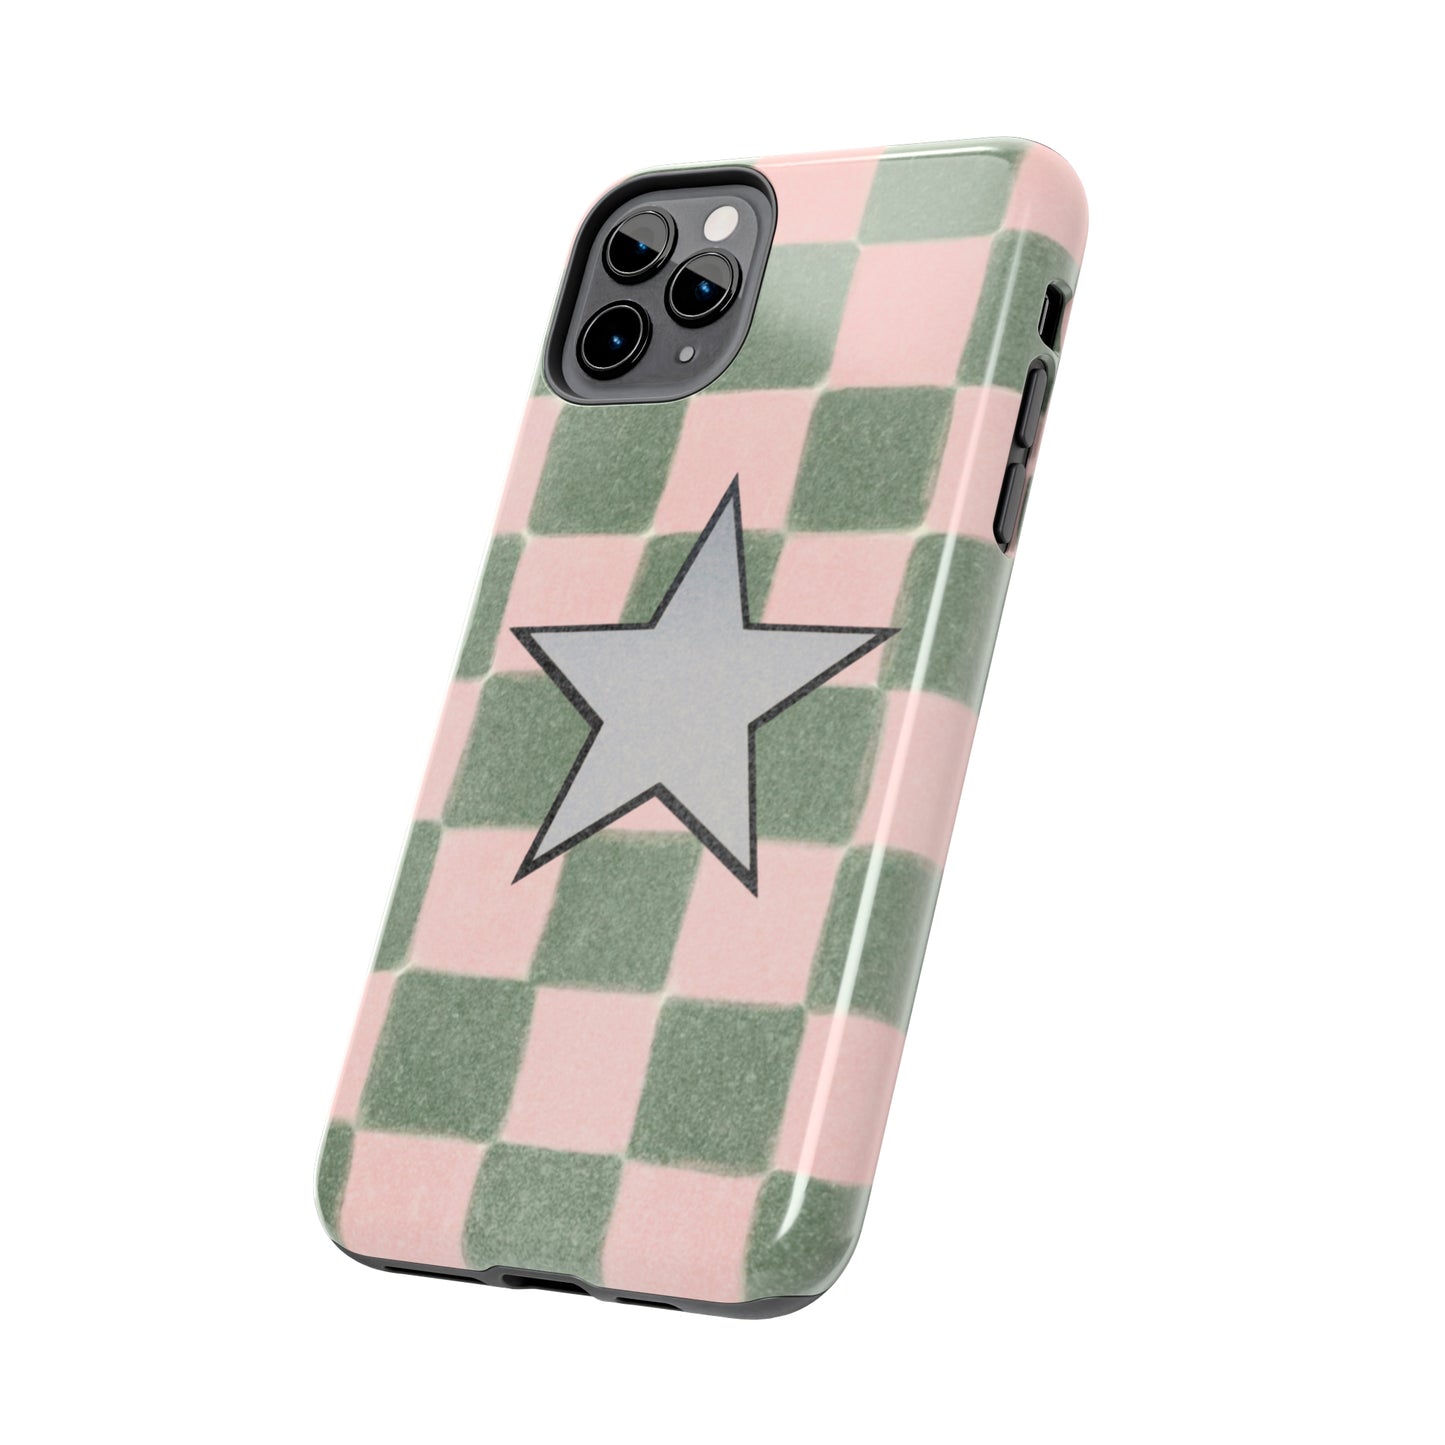 Checkered Star case